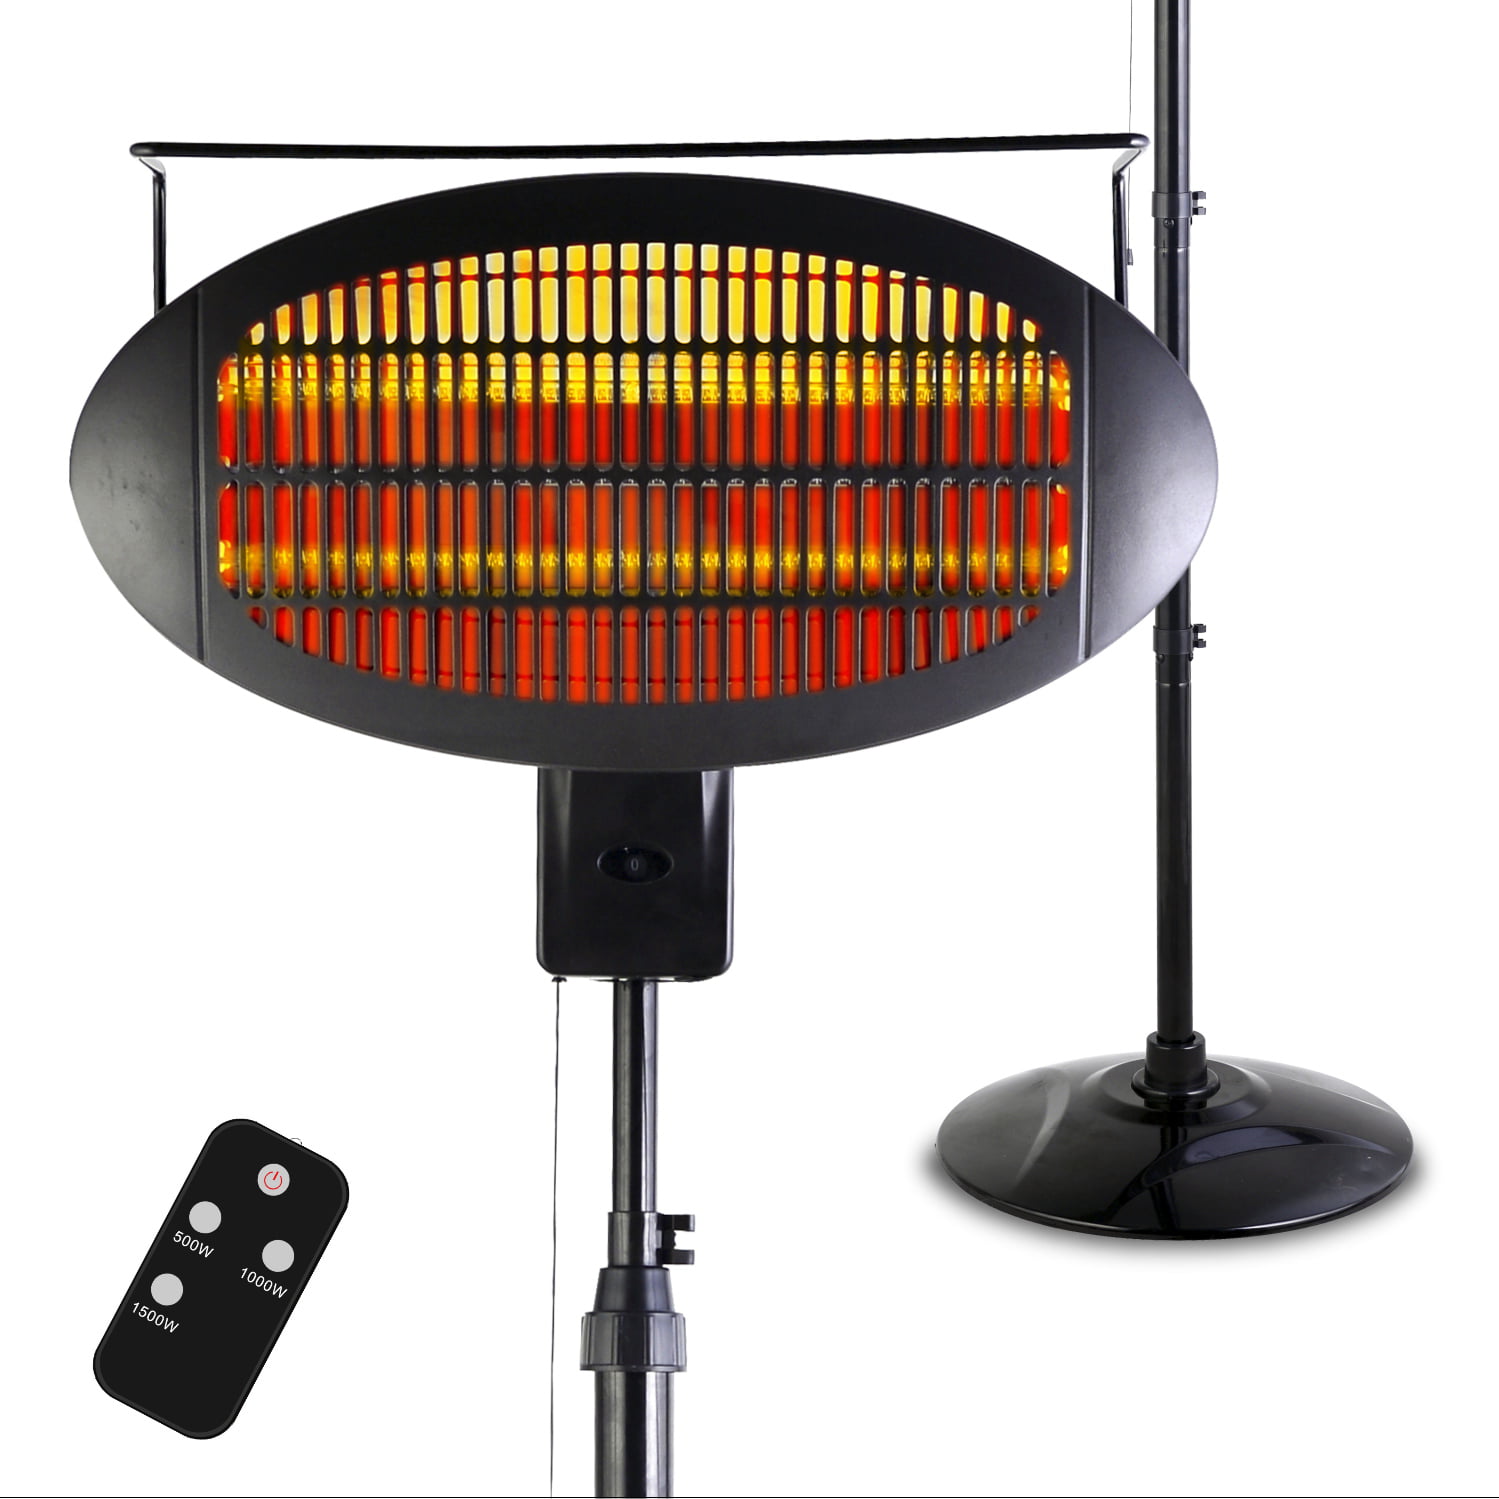 Optimus Garage-Outdoor Floor Standing Infrared Patio Heater with Remote -  Walmart.com